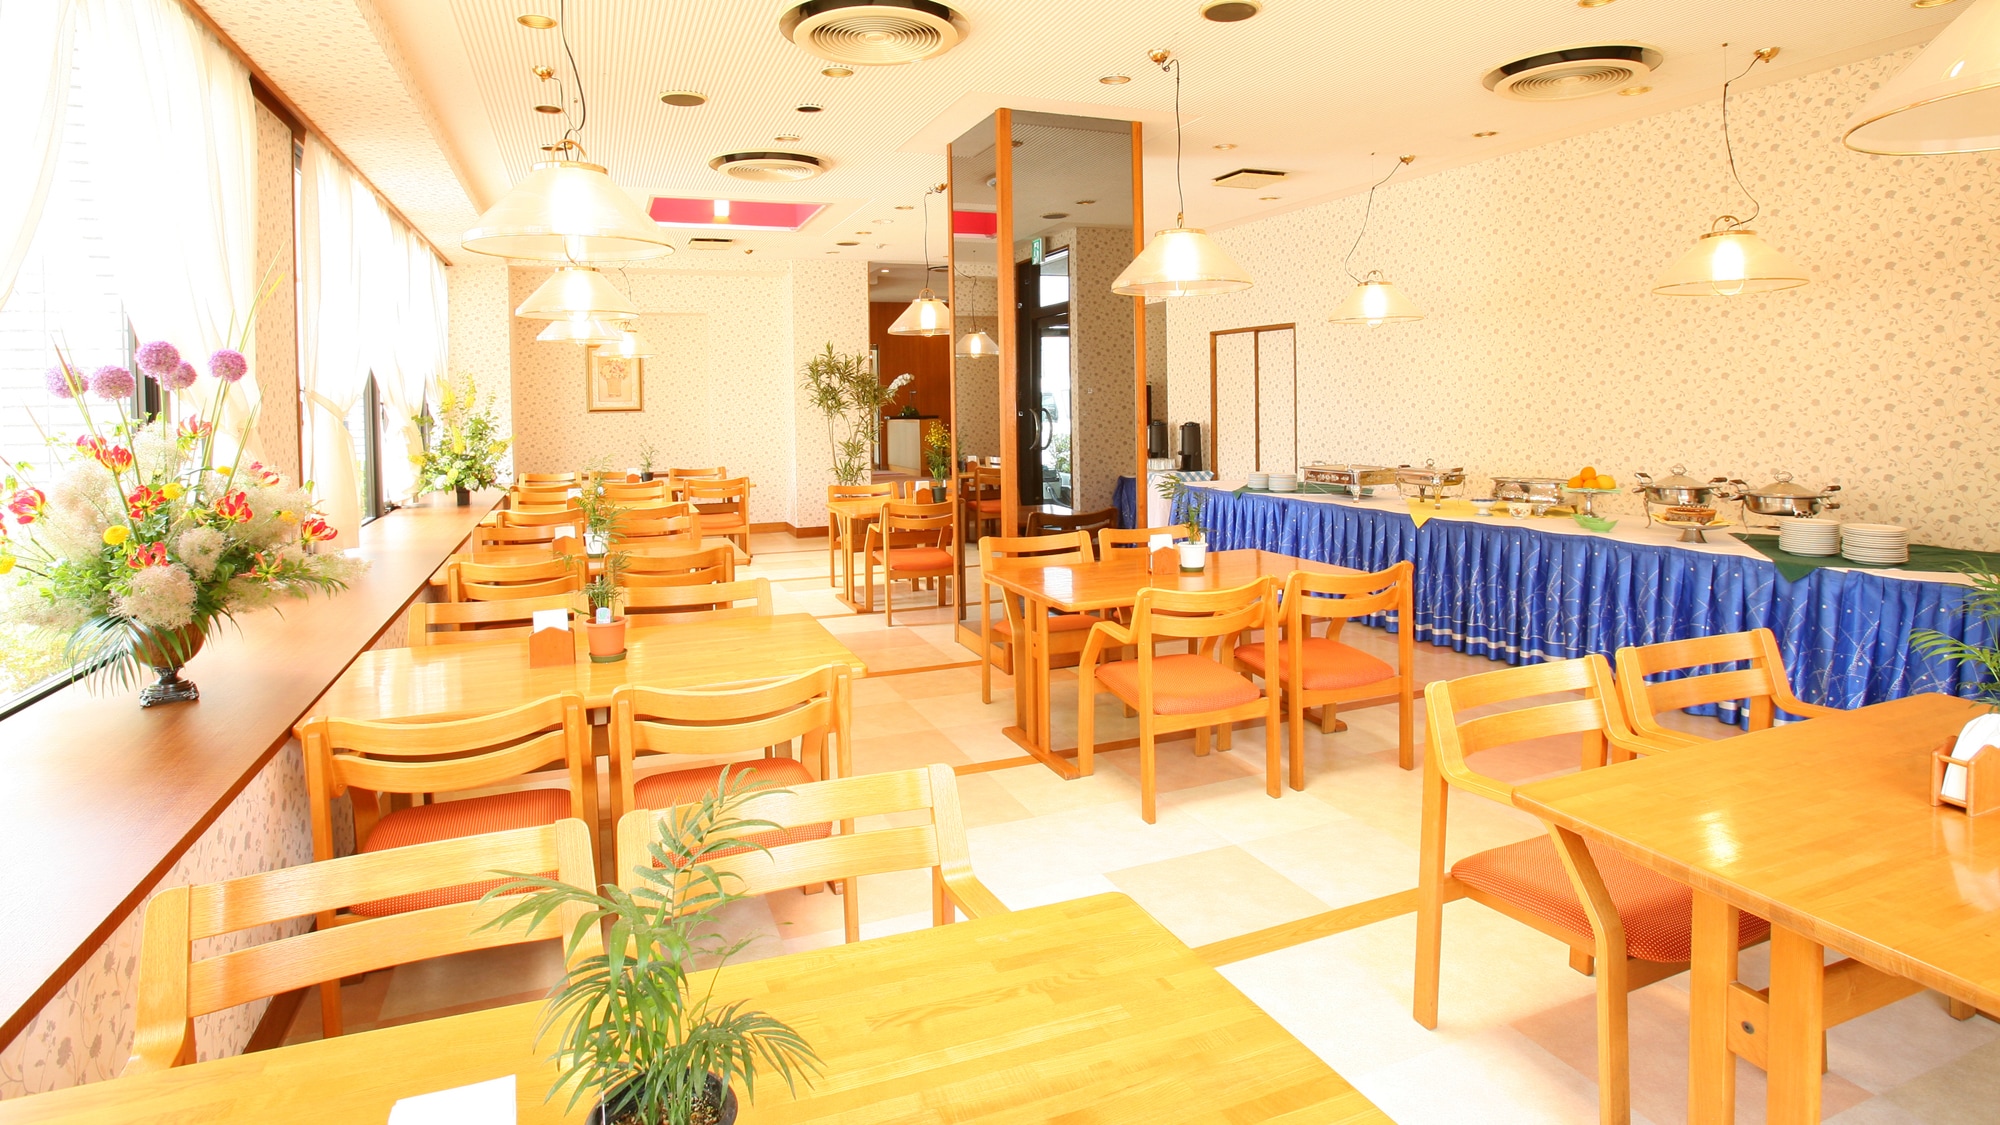 ◆ Restaurant (Hotel 1F)